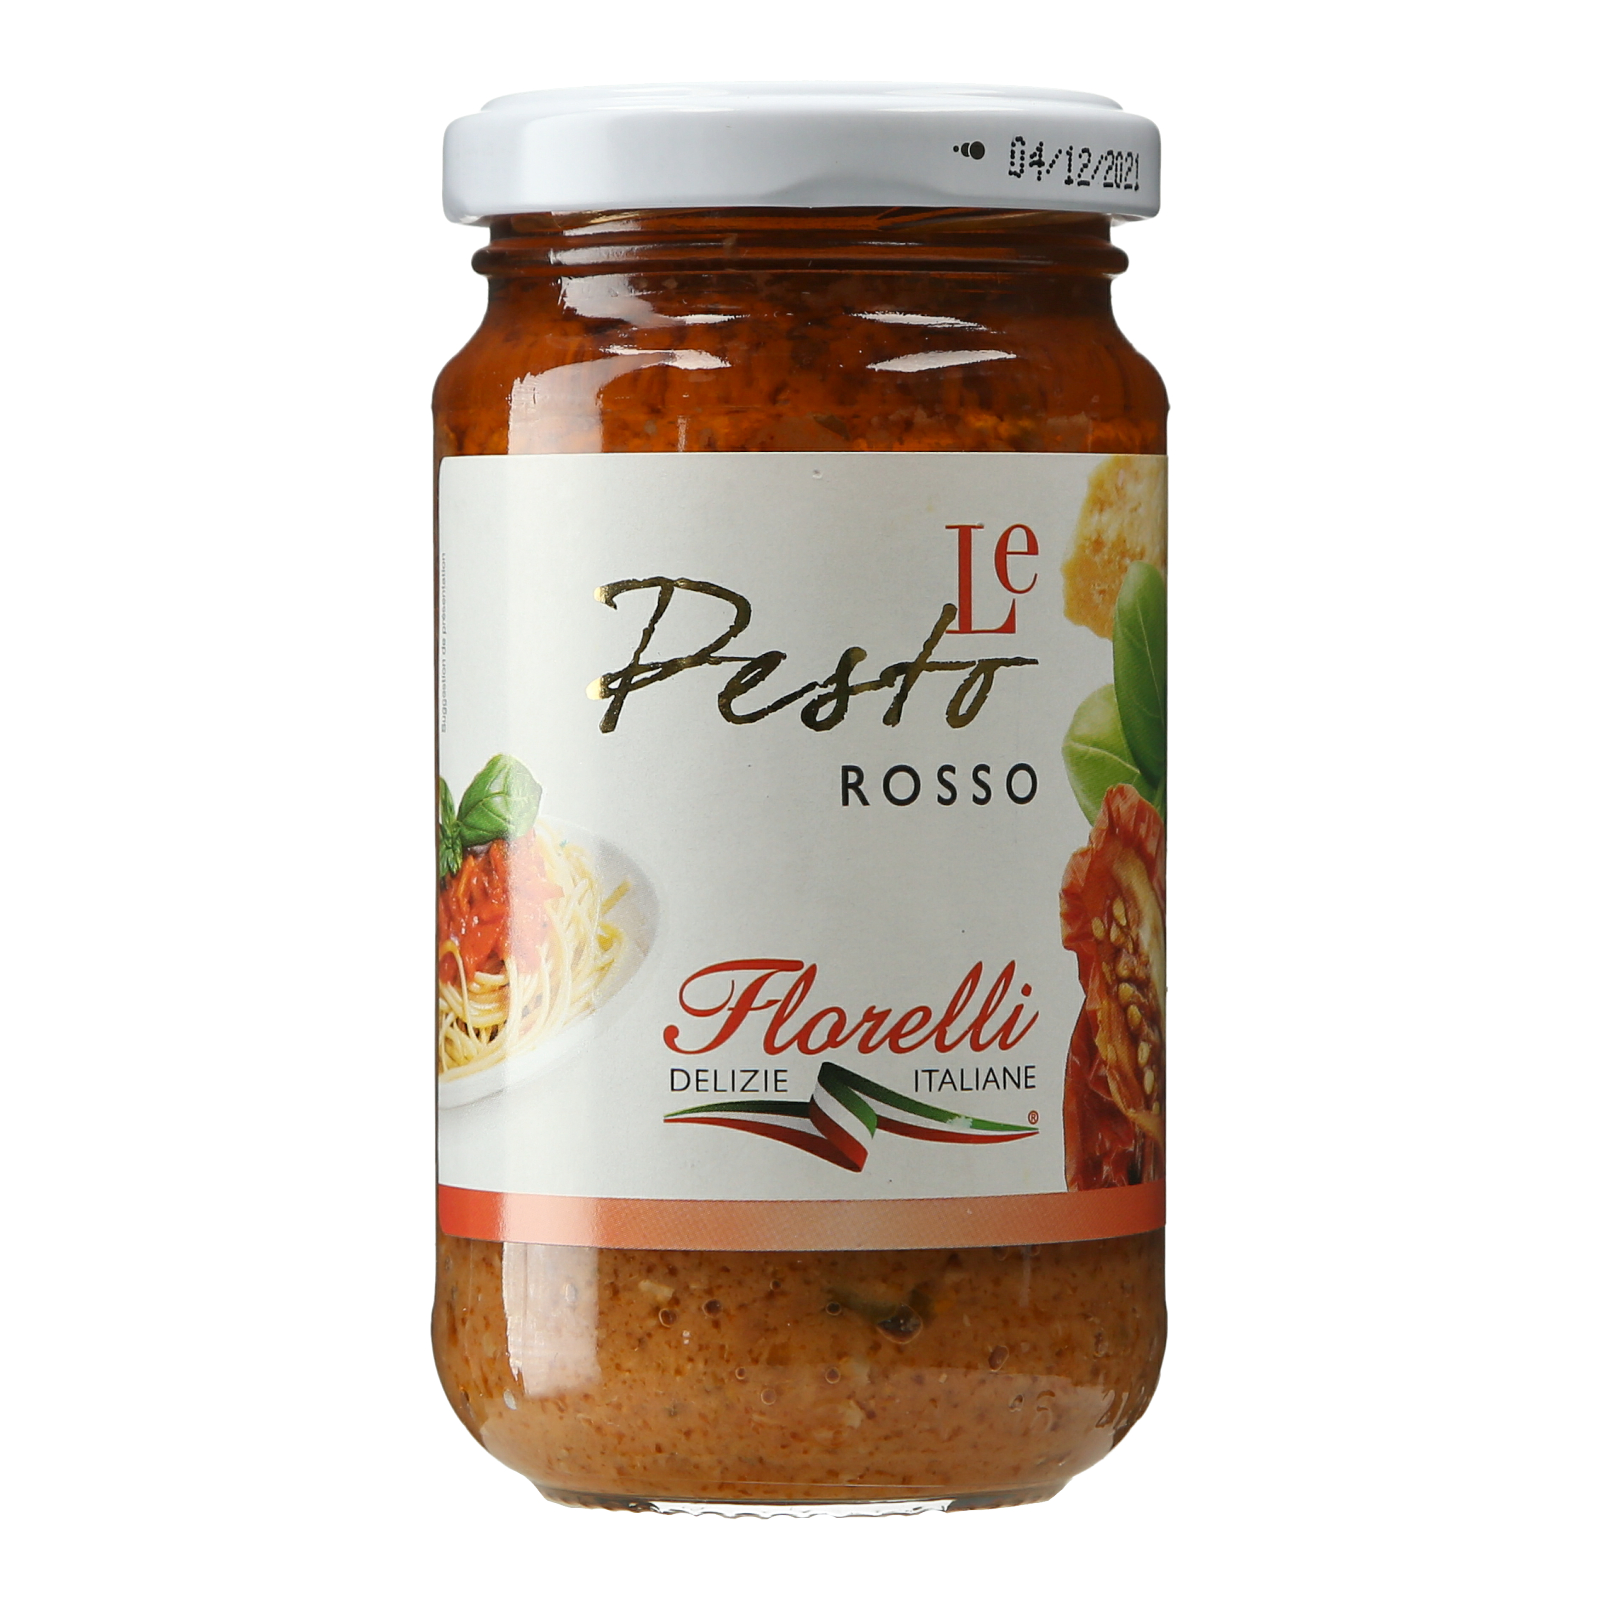 FLORELLI PESTO ROSSO - Italian Pesto Sauce 190g • GREYYS Gourmet Partner